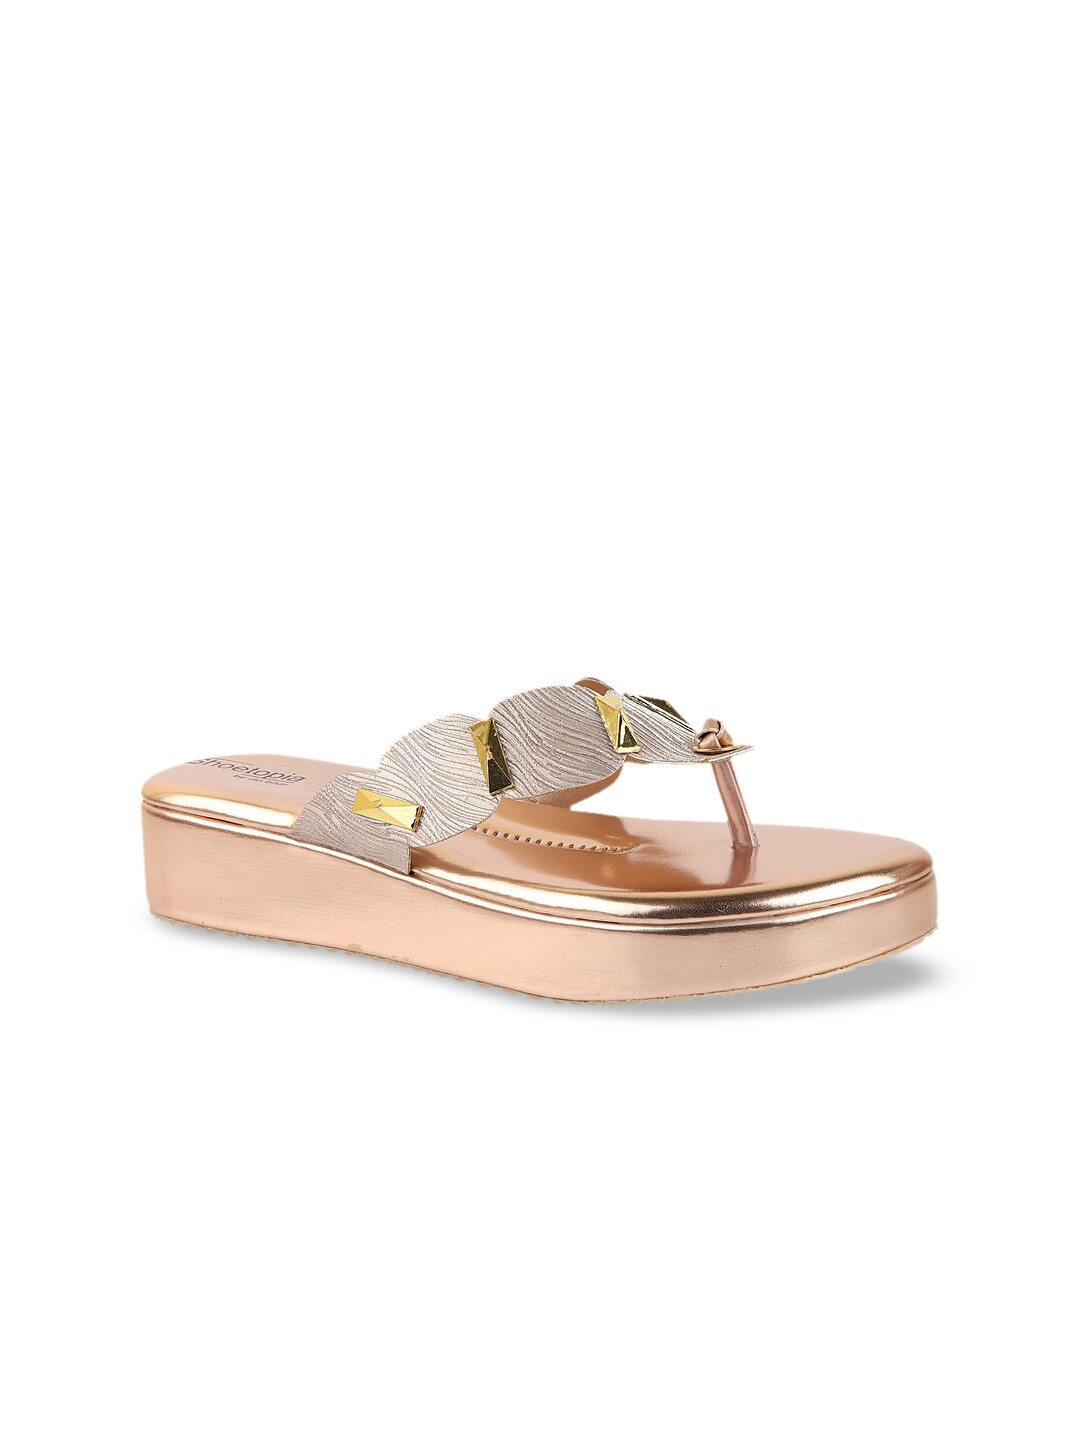 Shoetopia Pink Flatform Sandals Price in India